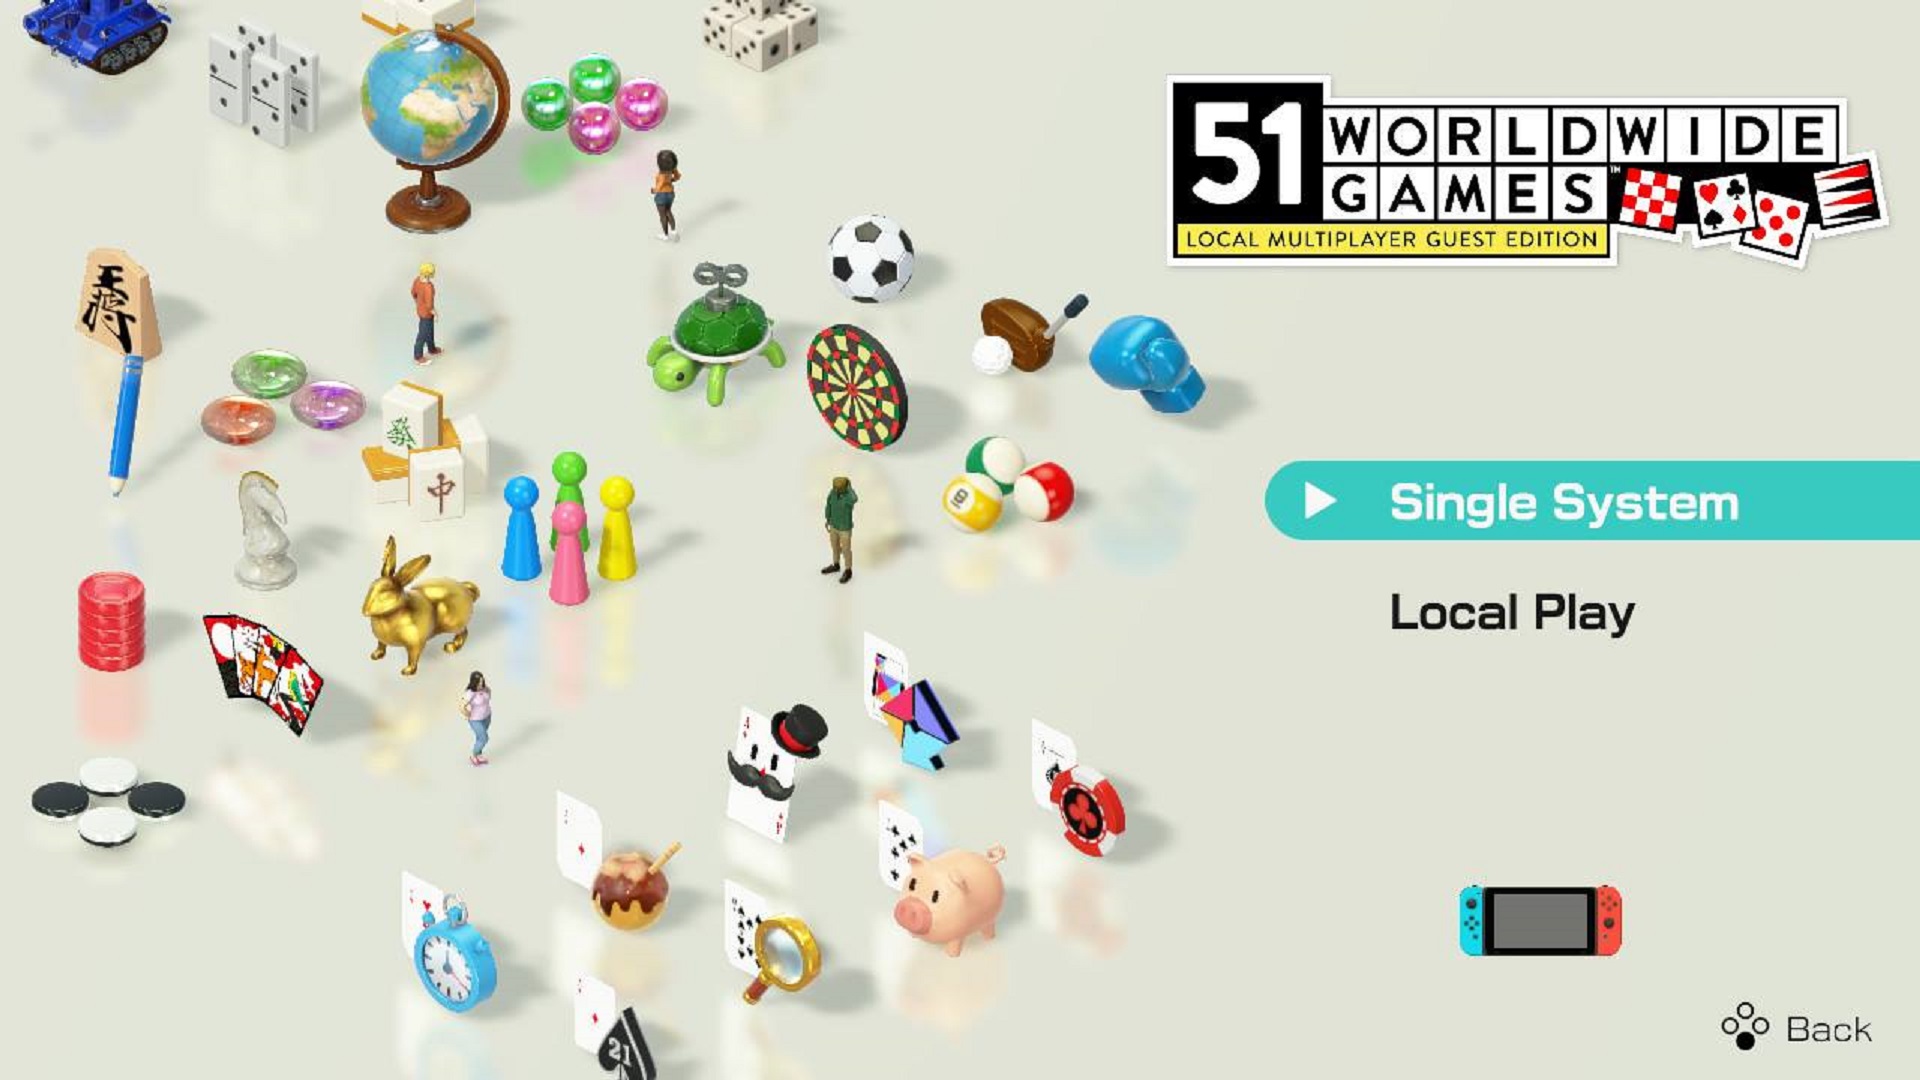 51 worldwide games local multiplayer